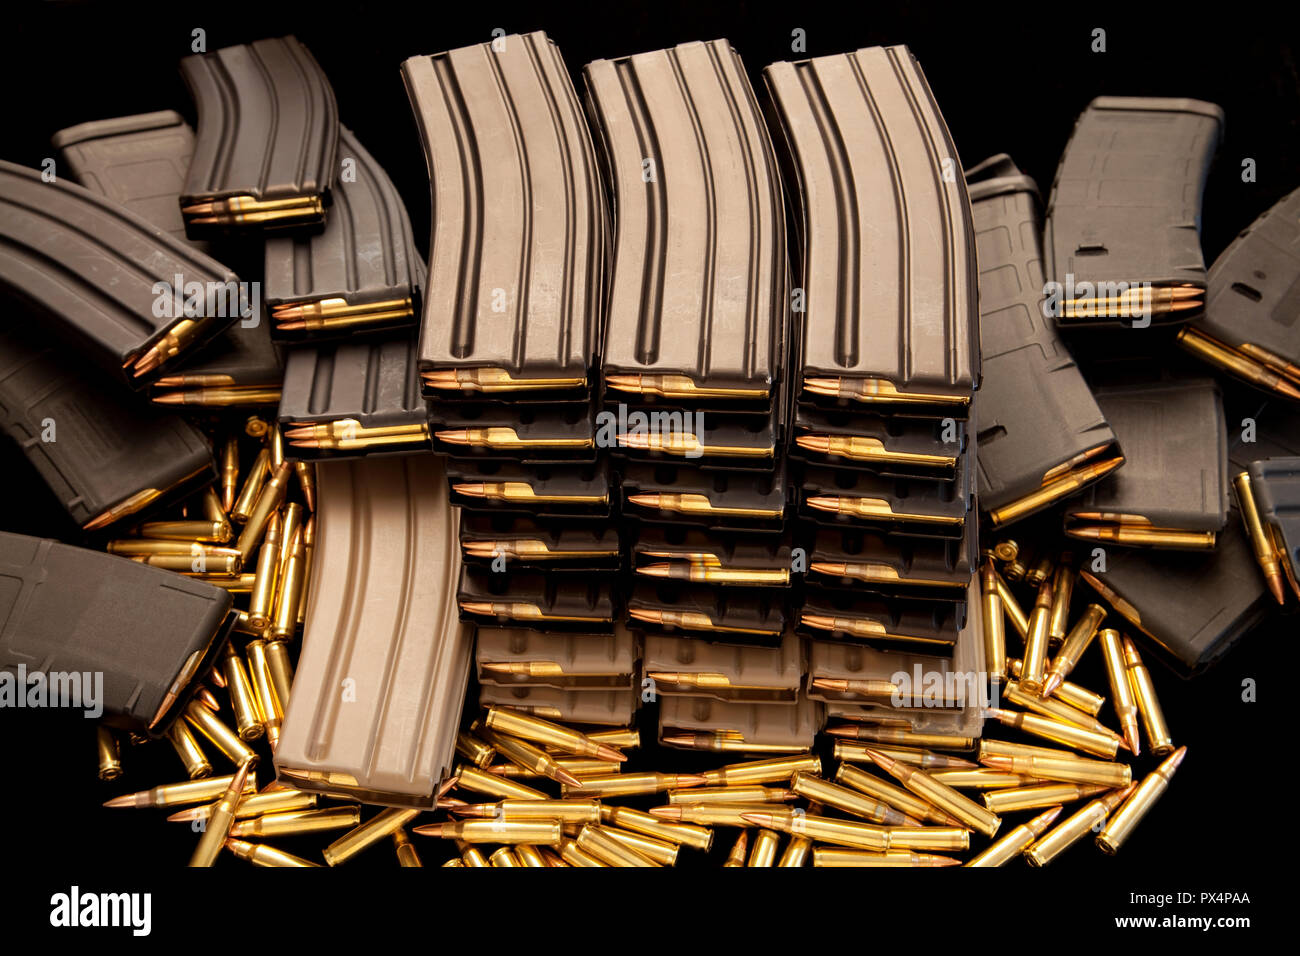 High capacity AR-15 ammunition magazines. Stock Photo